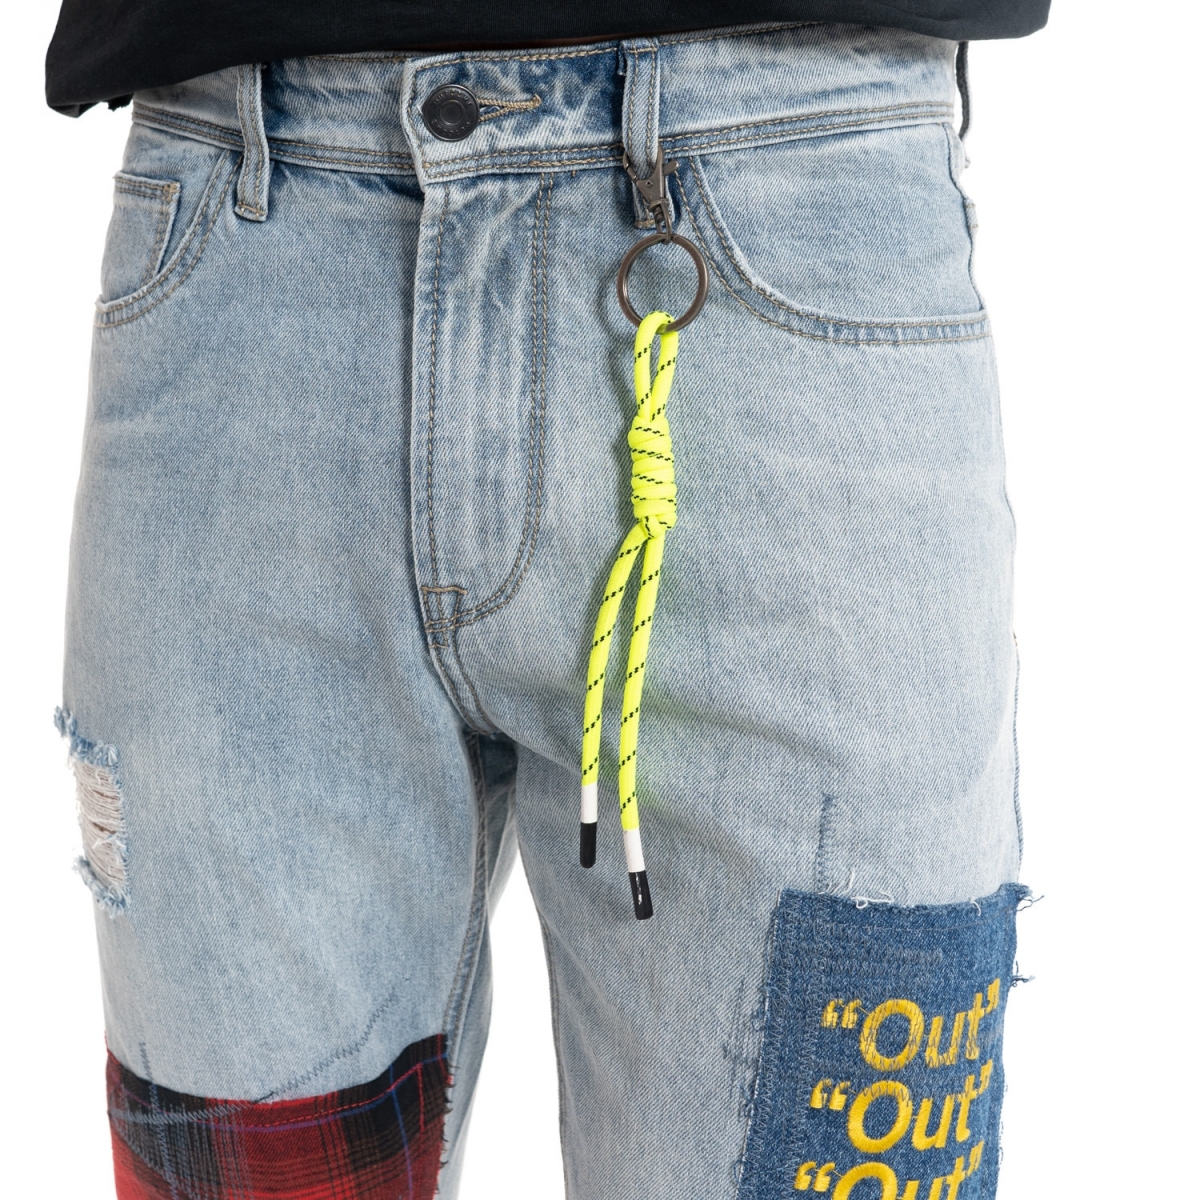 abbigliamento Jeans uomo Jeans con toppe GLOT688Y GIANNI LUPO Cafedelmar Shop